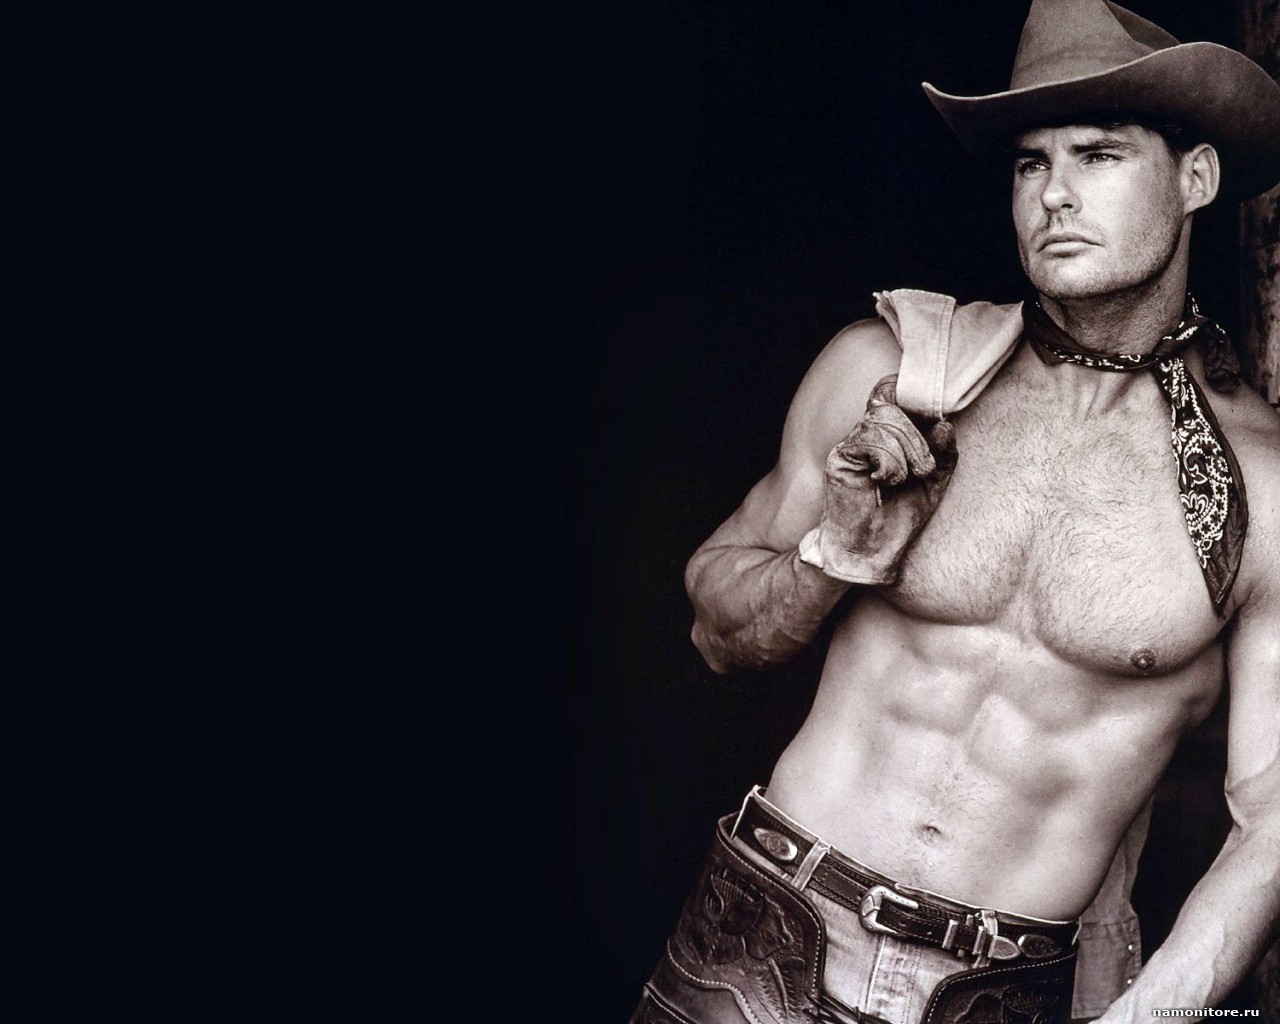 The Cowboy Men Wallpaper Photografies Photo